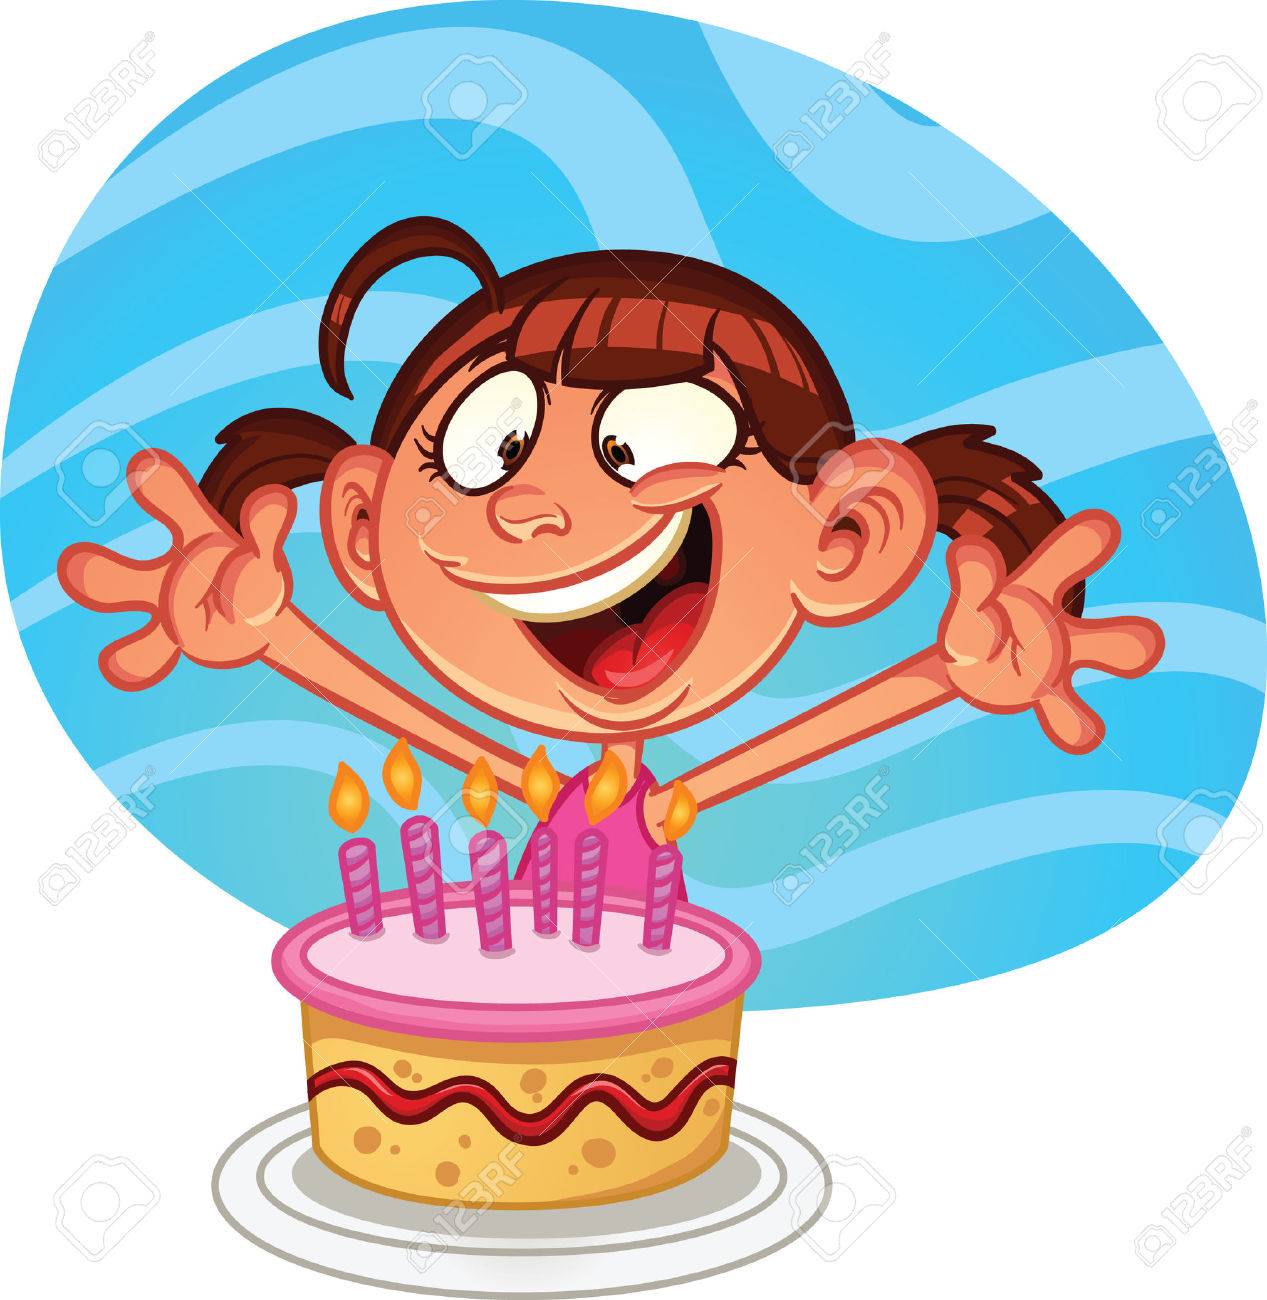 Cartoon girl with birthday cake Vector clip art illustration...